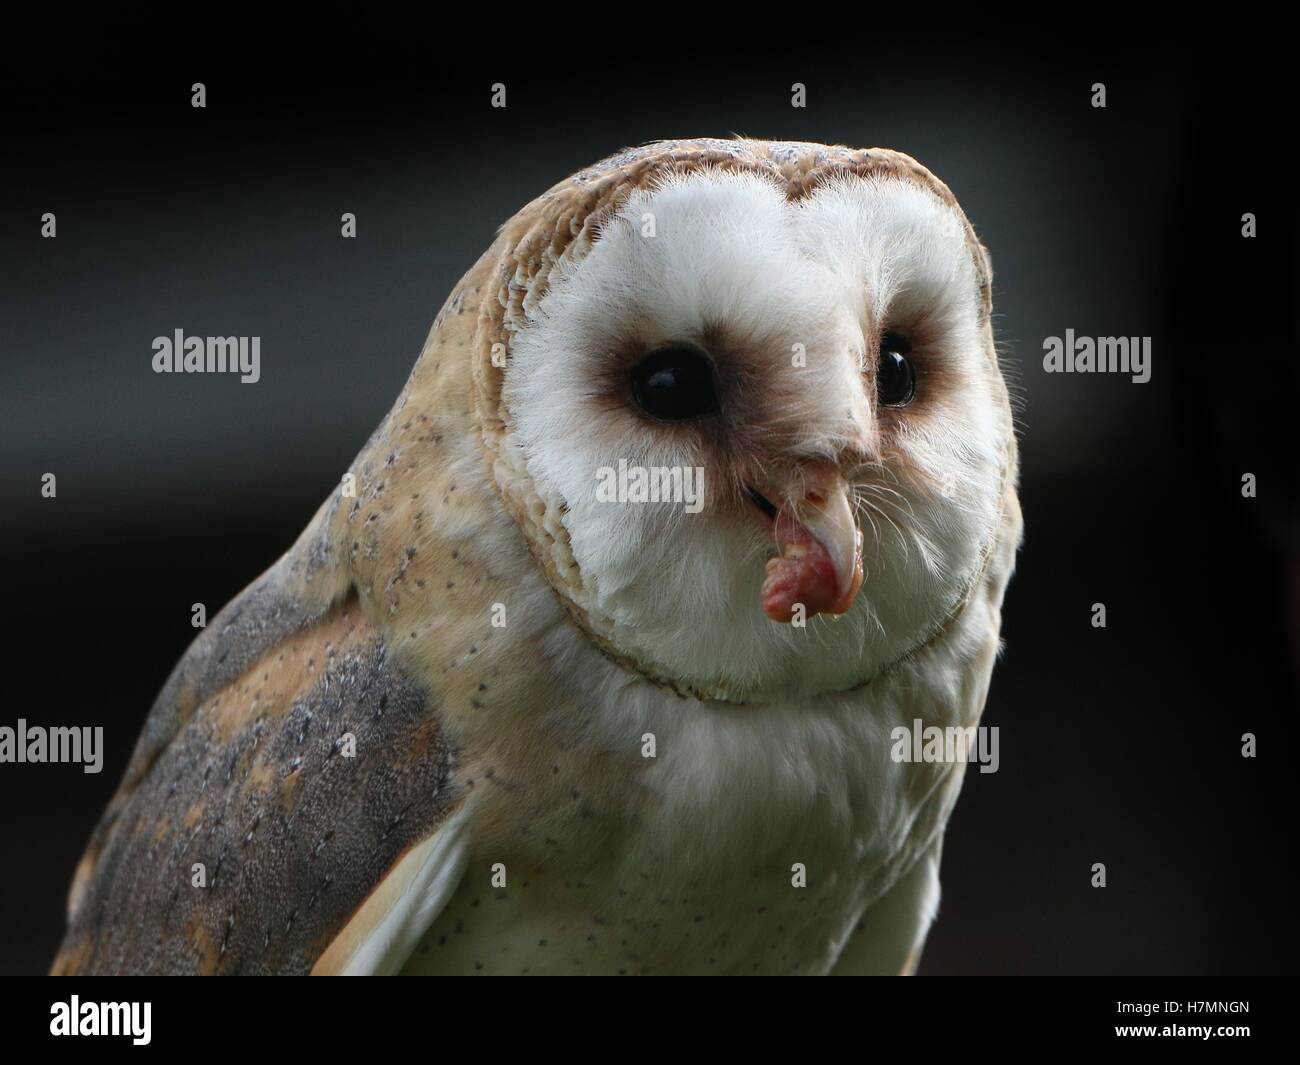 European Barn owl (Tyto alba) in close-up Stock Photo